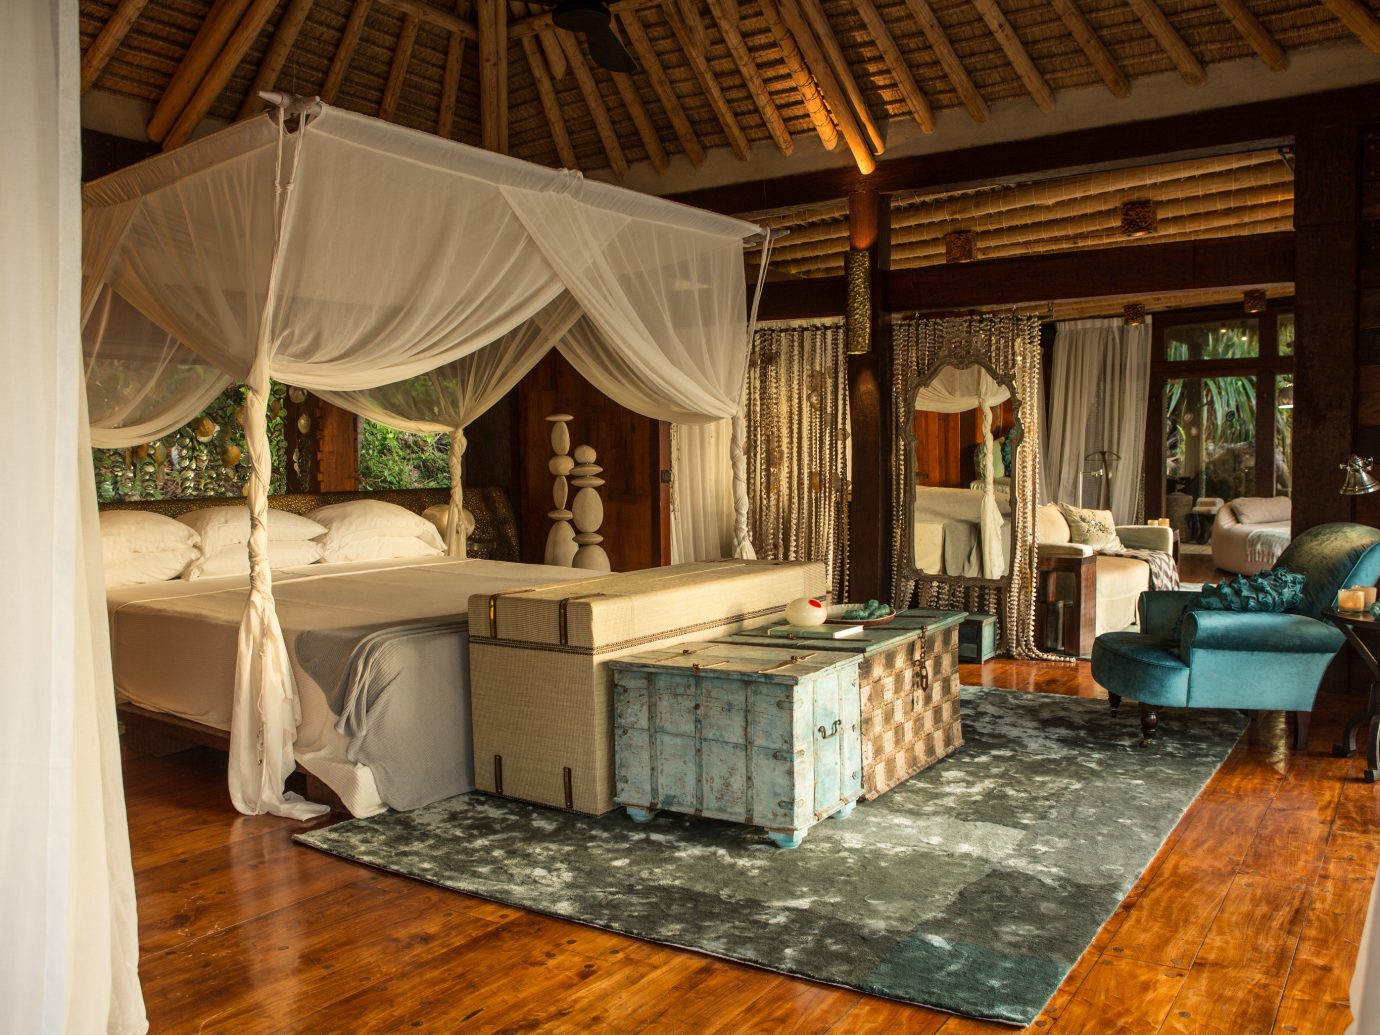 Luxury Travel Trip Ideas floor indoor room Living interior design furniture wood tent flooring stone